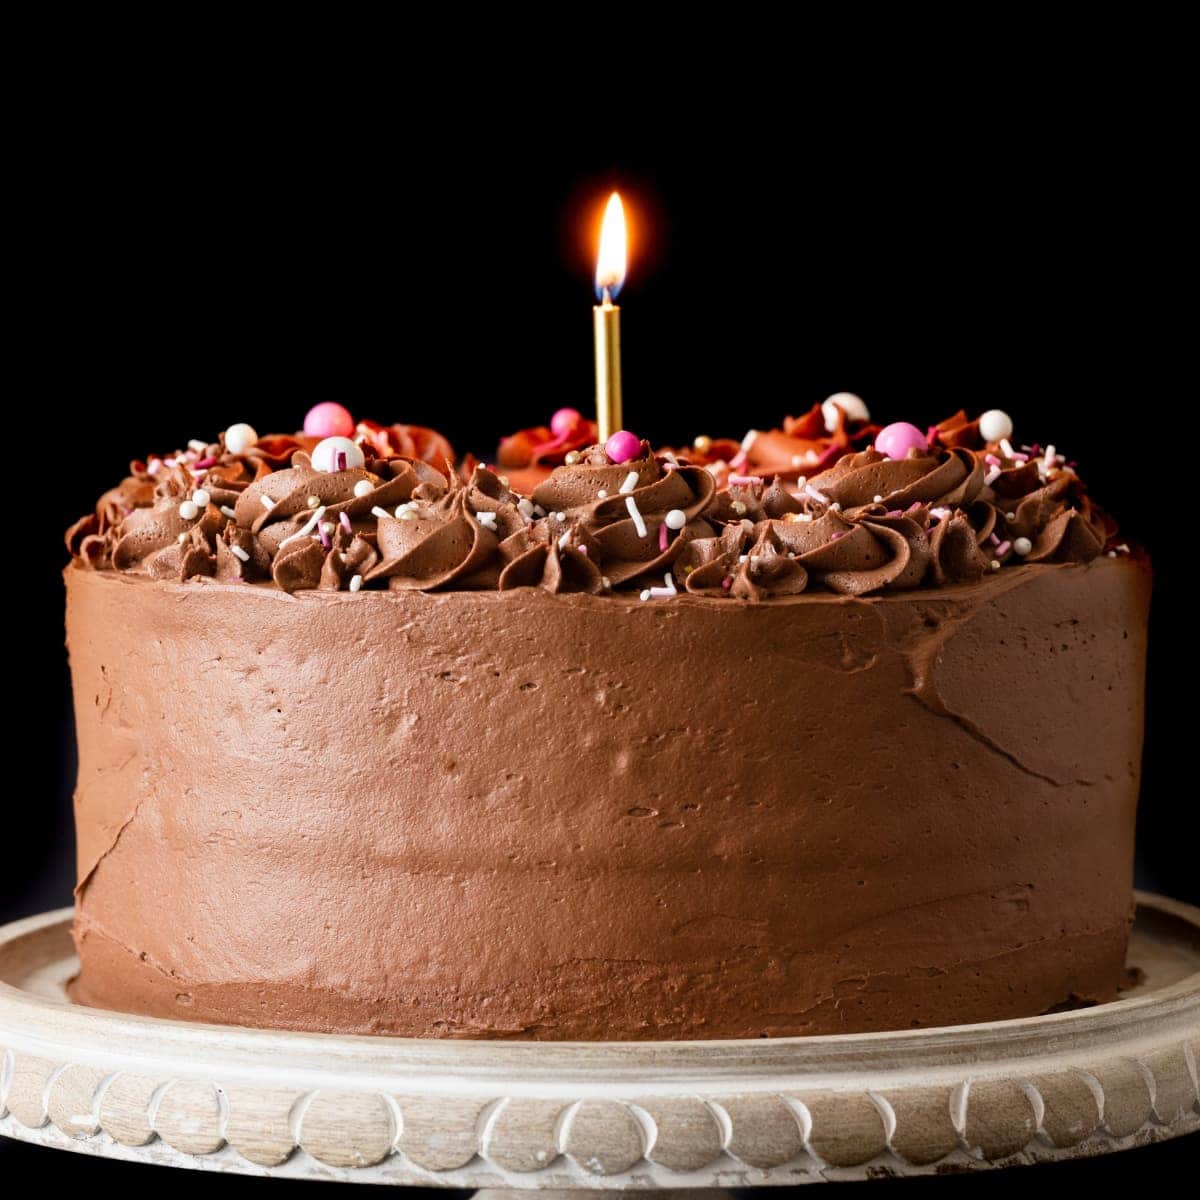 Happy Birthday Cake HD Image Wallpaper Pictures & Photos for Whatsapp Facebook Instagram Twitter Pinterest Tik-Tok Free Download जन्मदिन केक की बेहतरीन तस्वीर